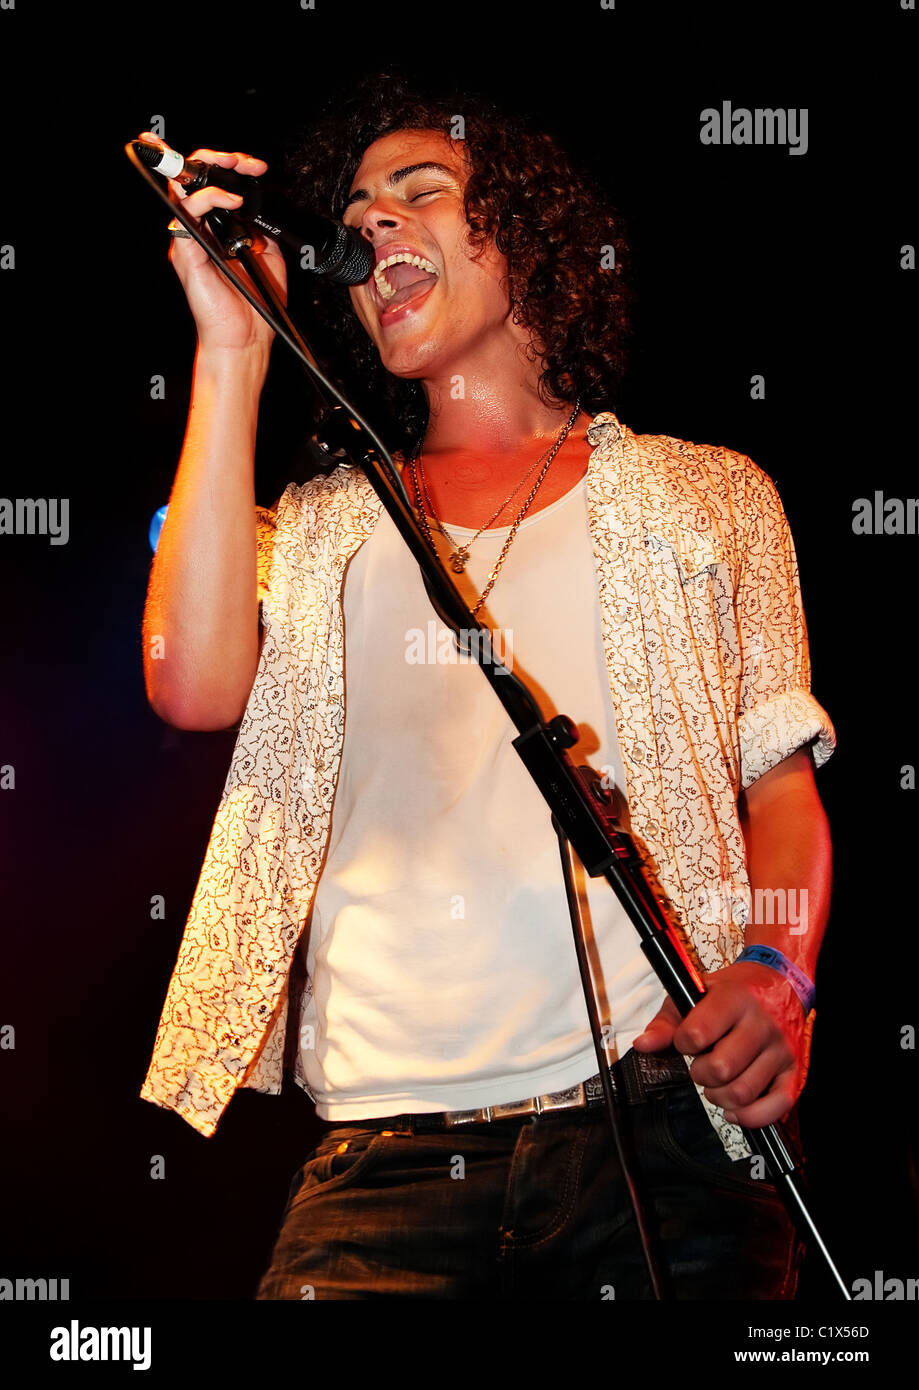 Alex Vargas of Vagabond performing live at Masque Liverpool, 17.08.09 Sakura Stock Photo -